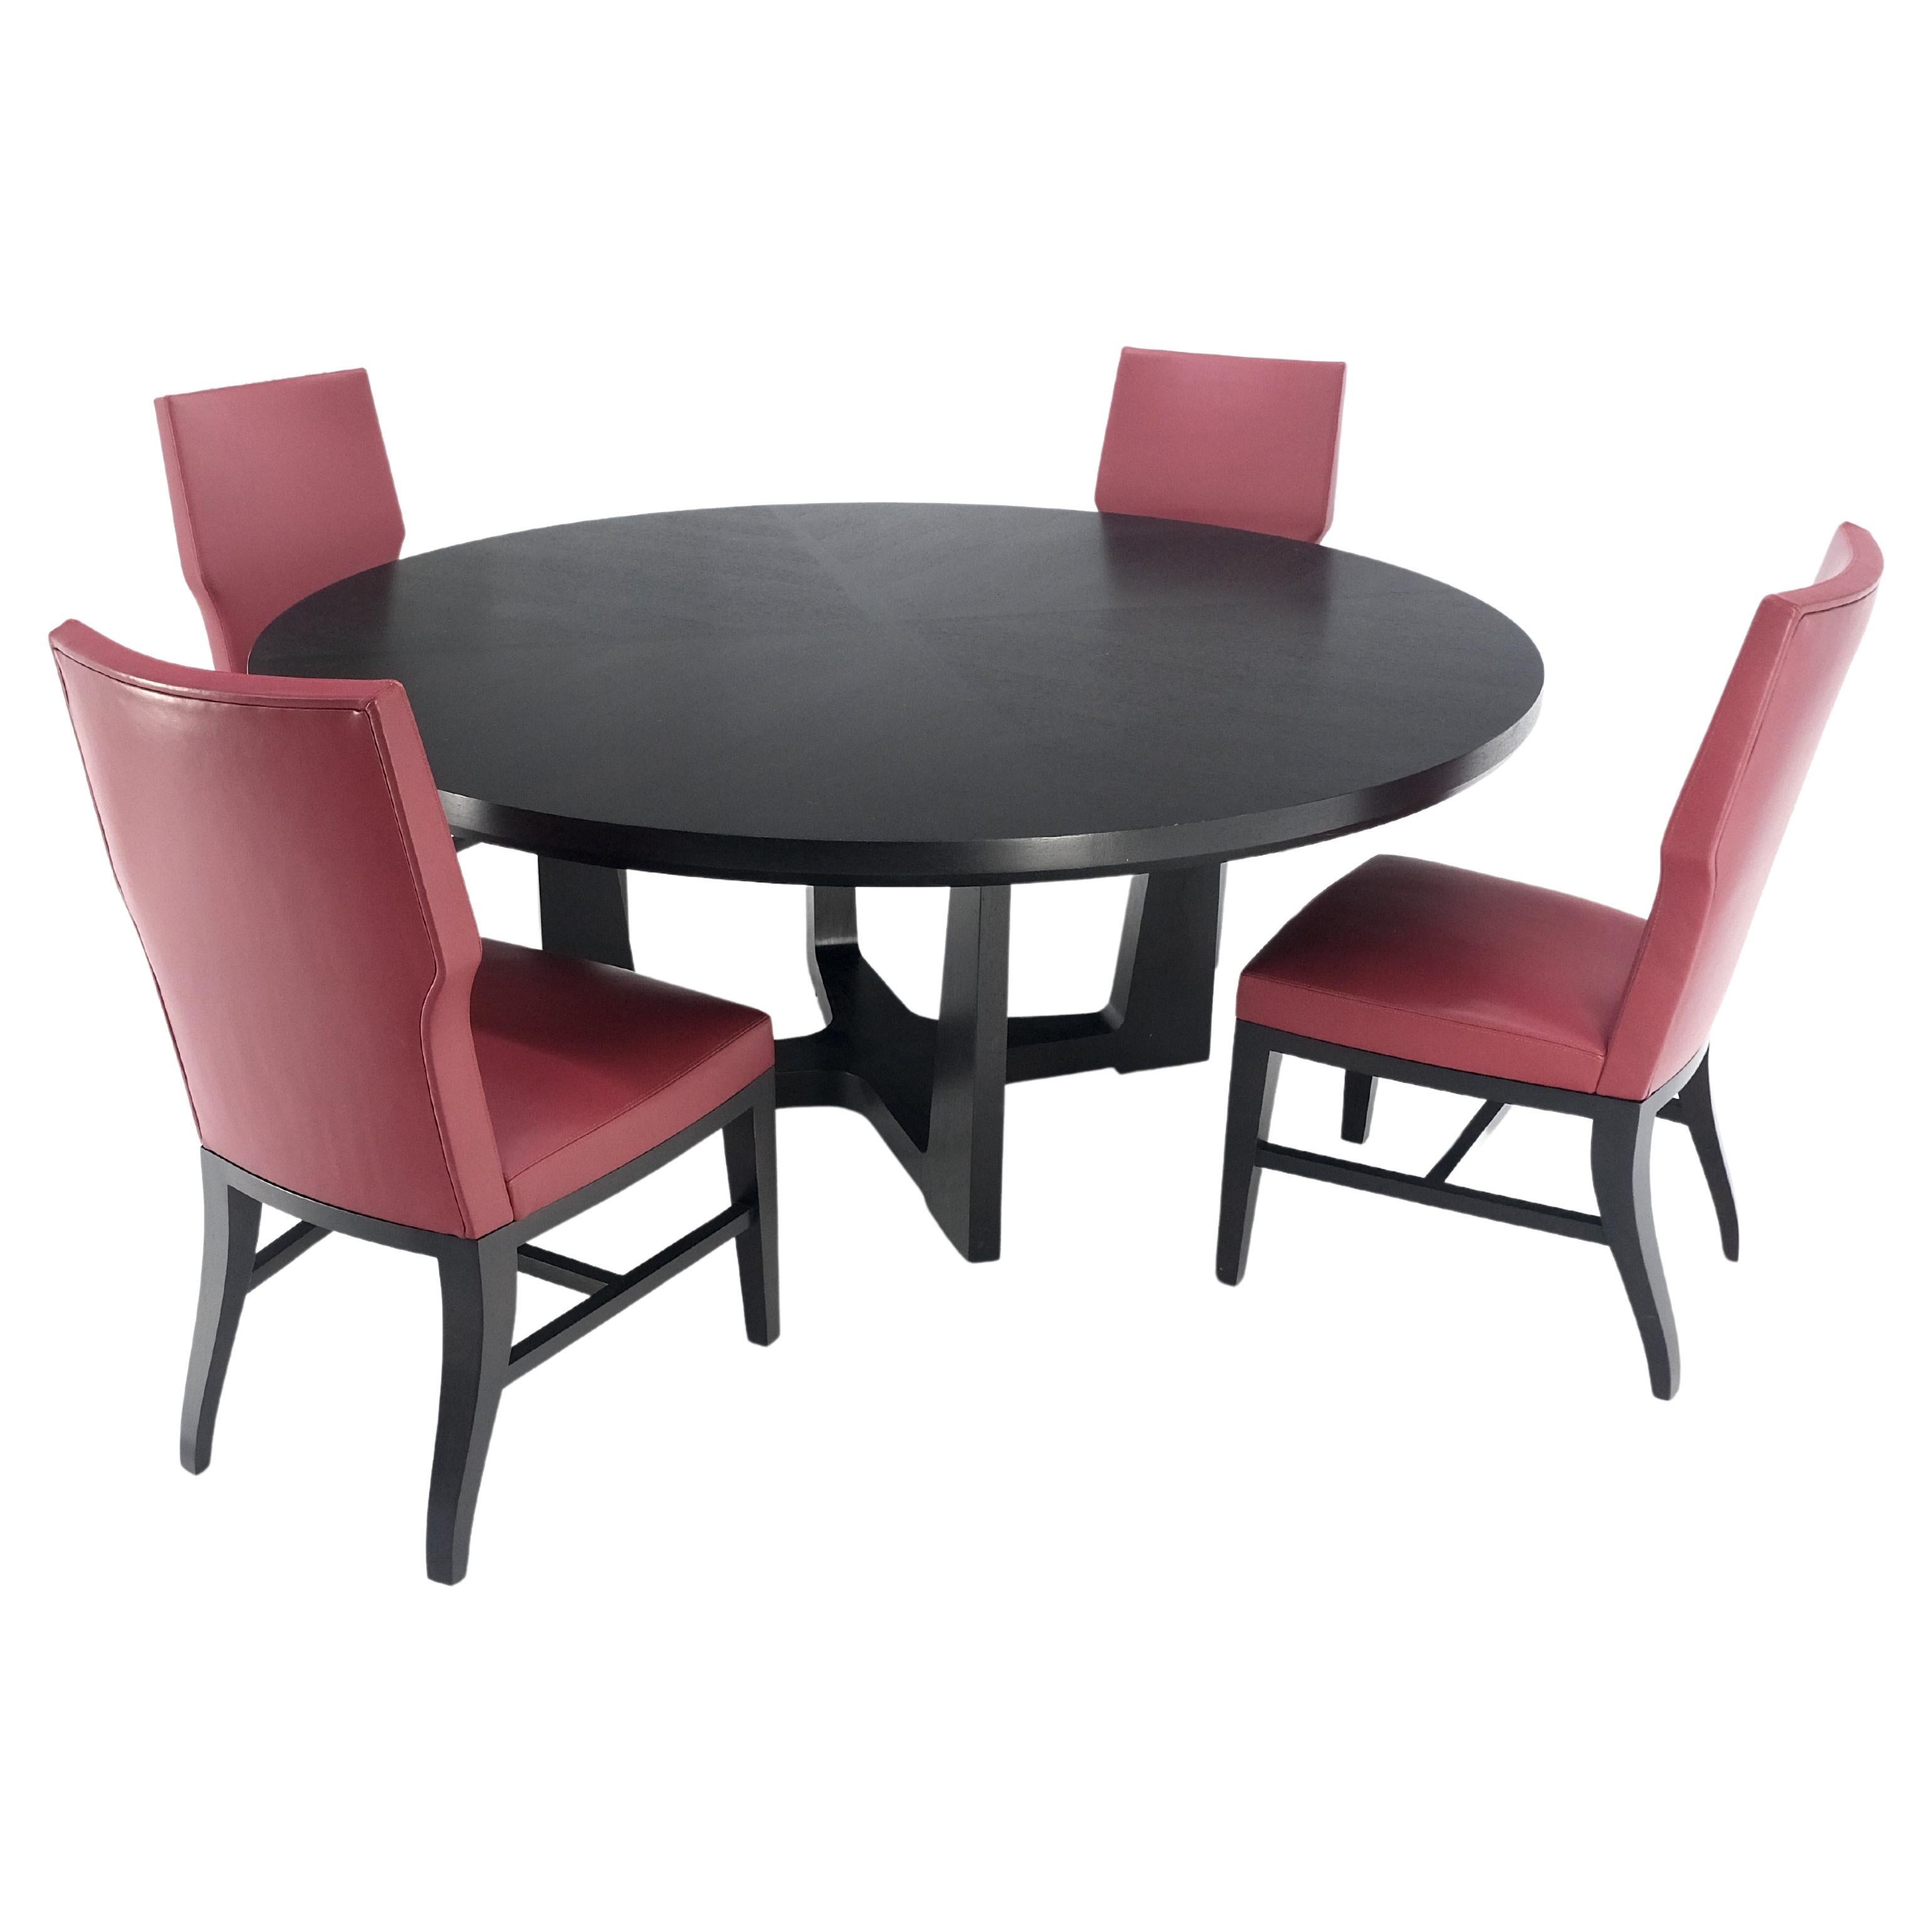 Holly Hunt Large 6' Diameter Round Ebonized Table Oak 4 Chairs Dining Set MINT!